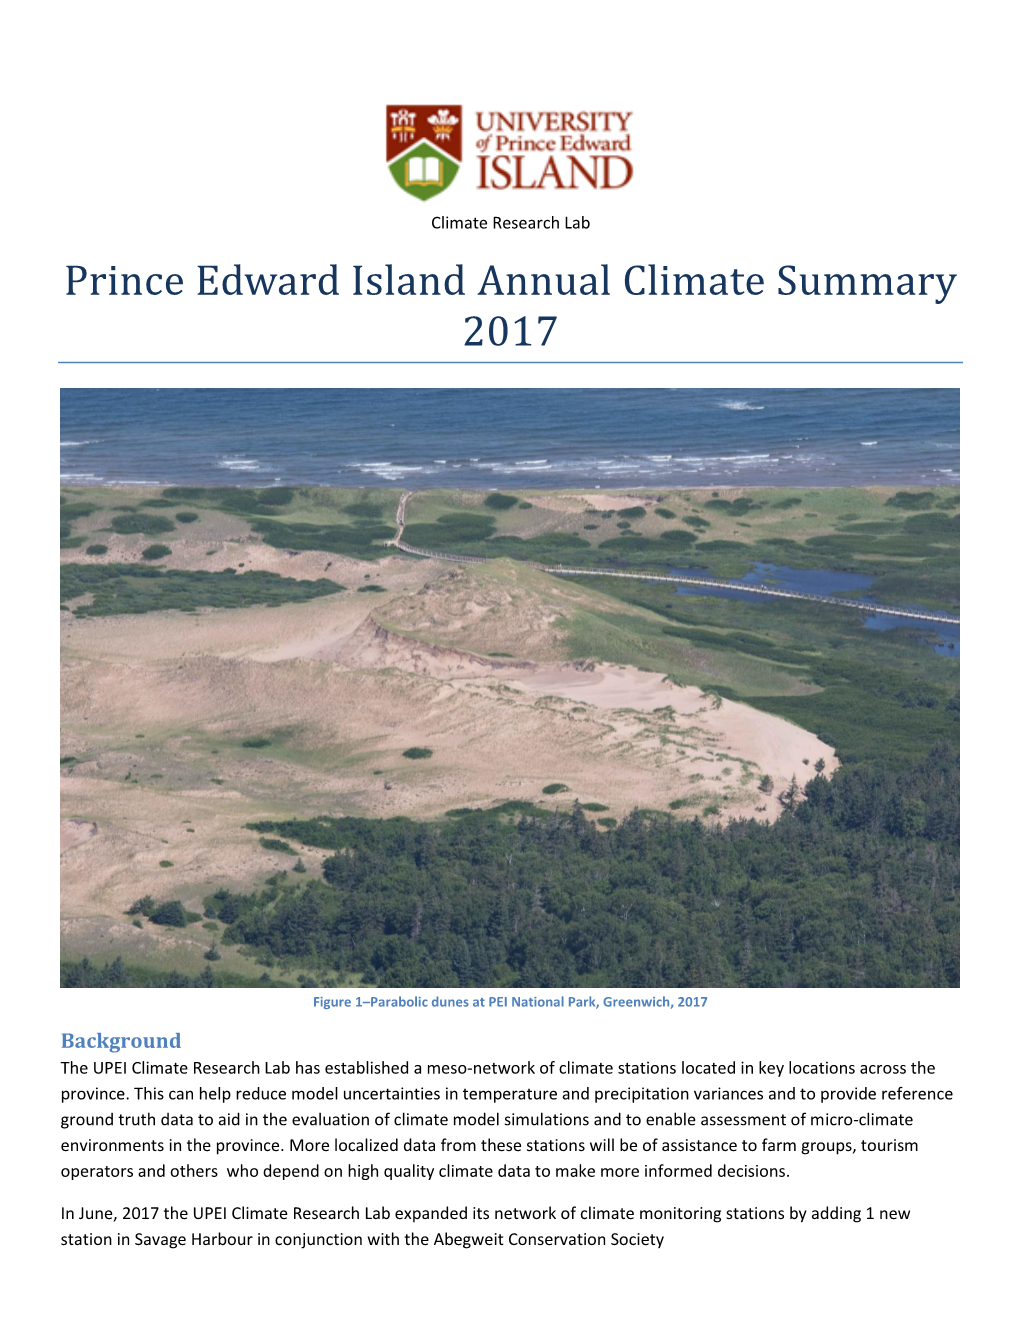 Prince Edward Island Annual Climate Summary 2017